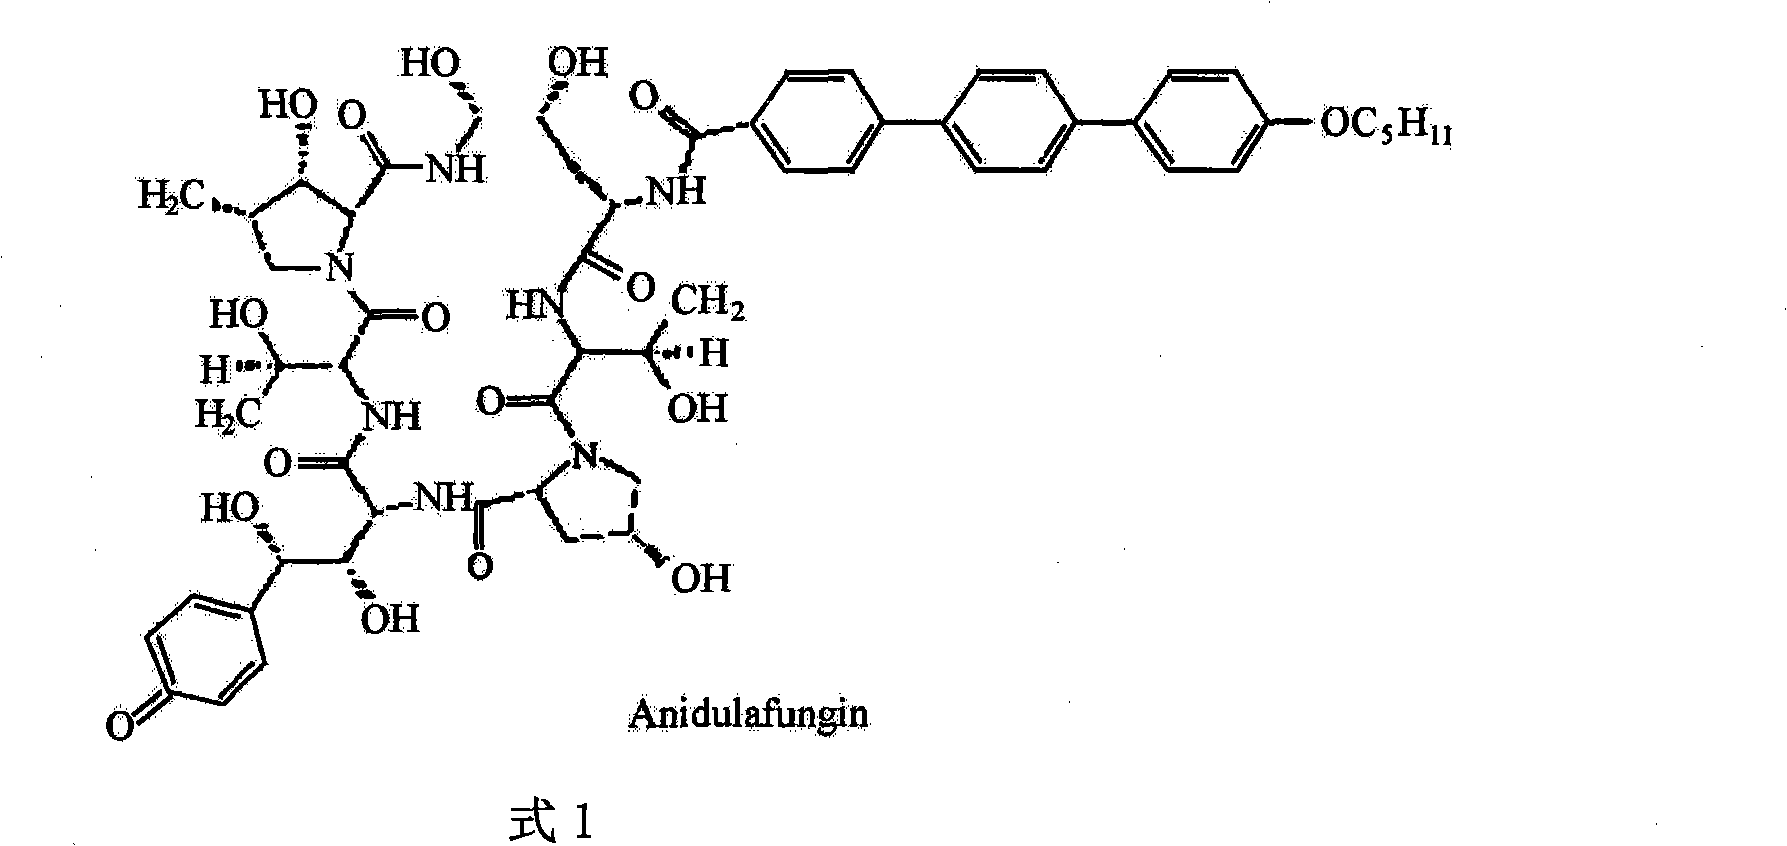 Preparation method of anidulafungin side chain intermediate